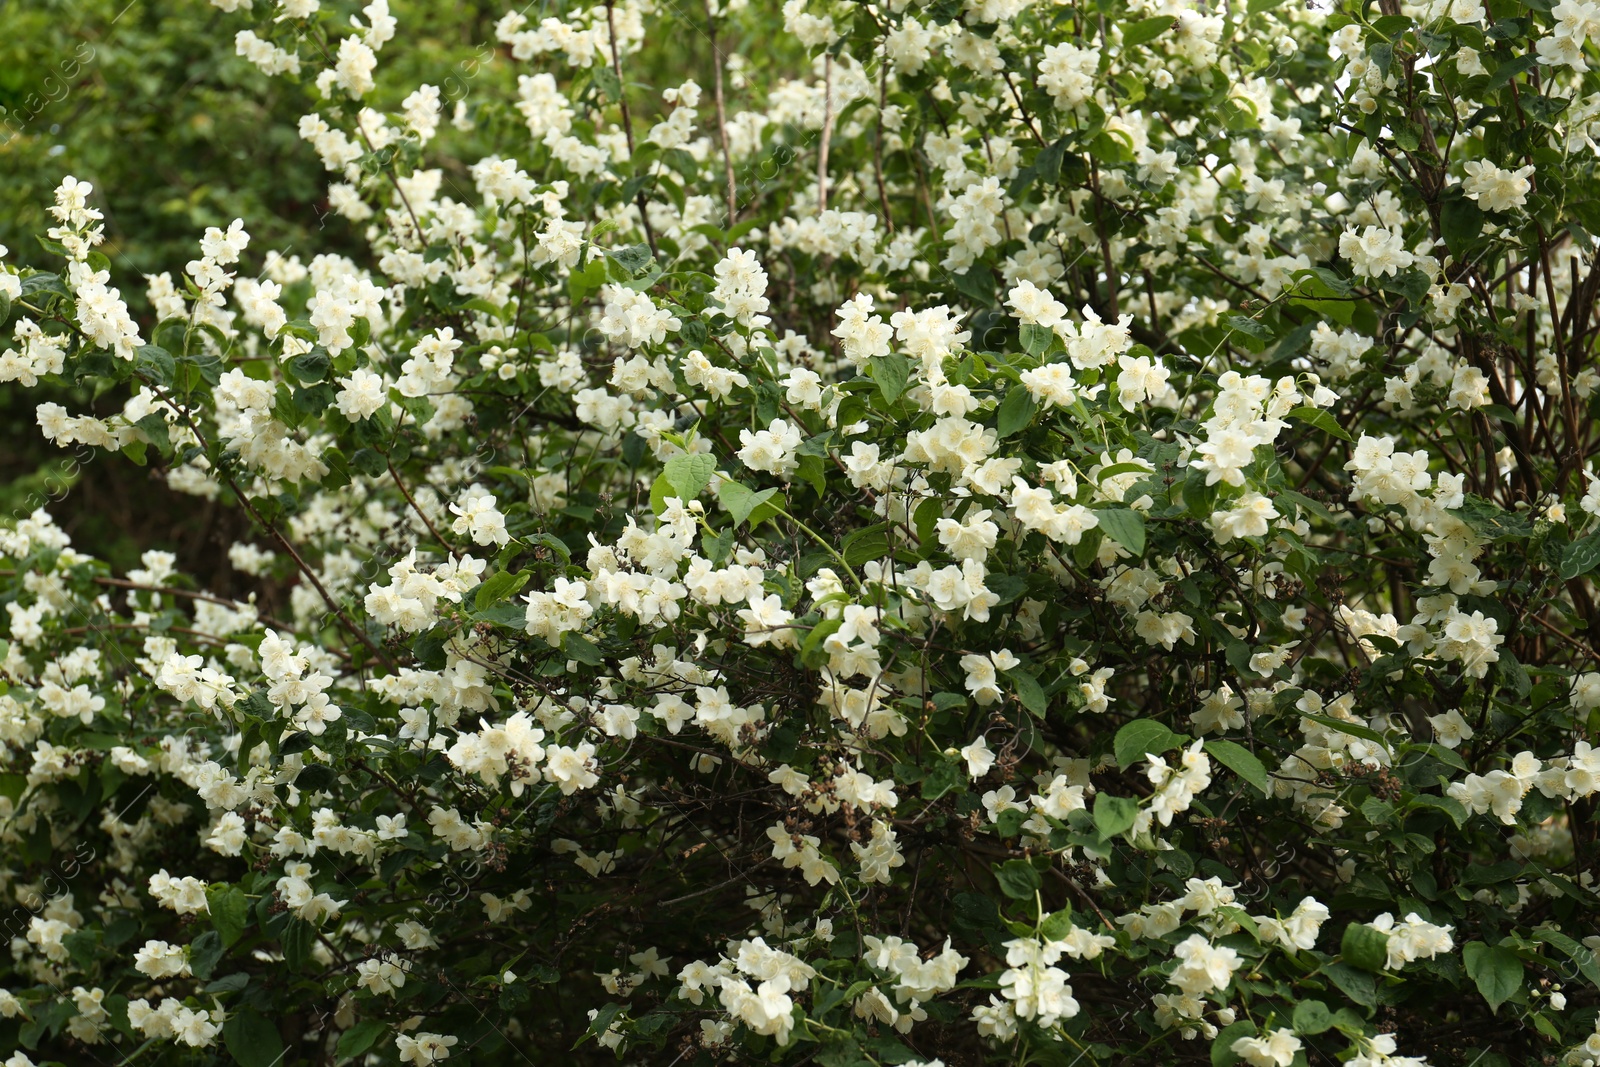 Photo of Beautiful jasmine shrub with white flowers outdoors